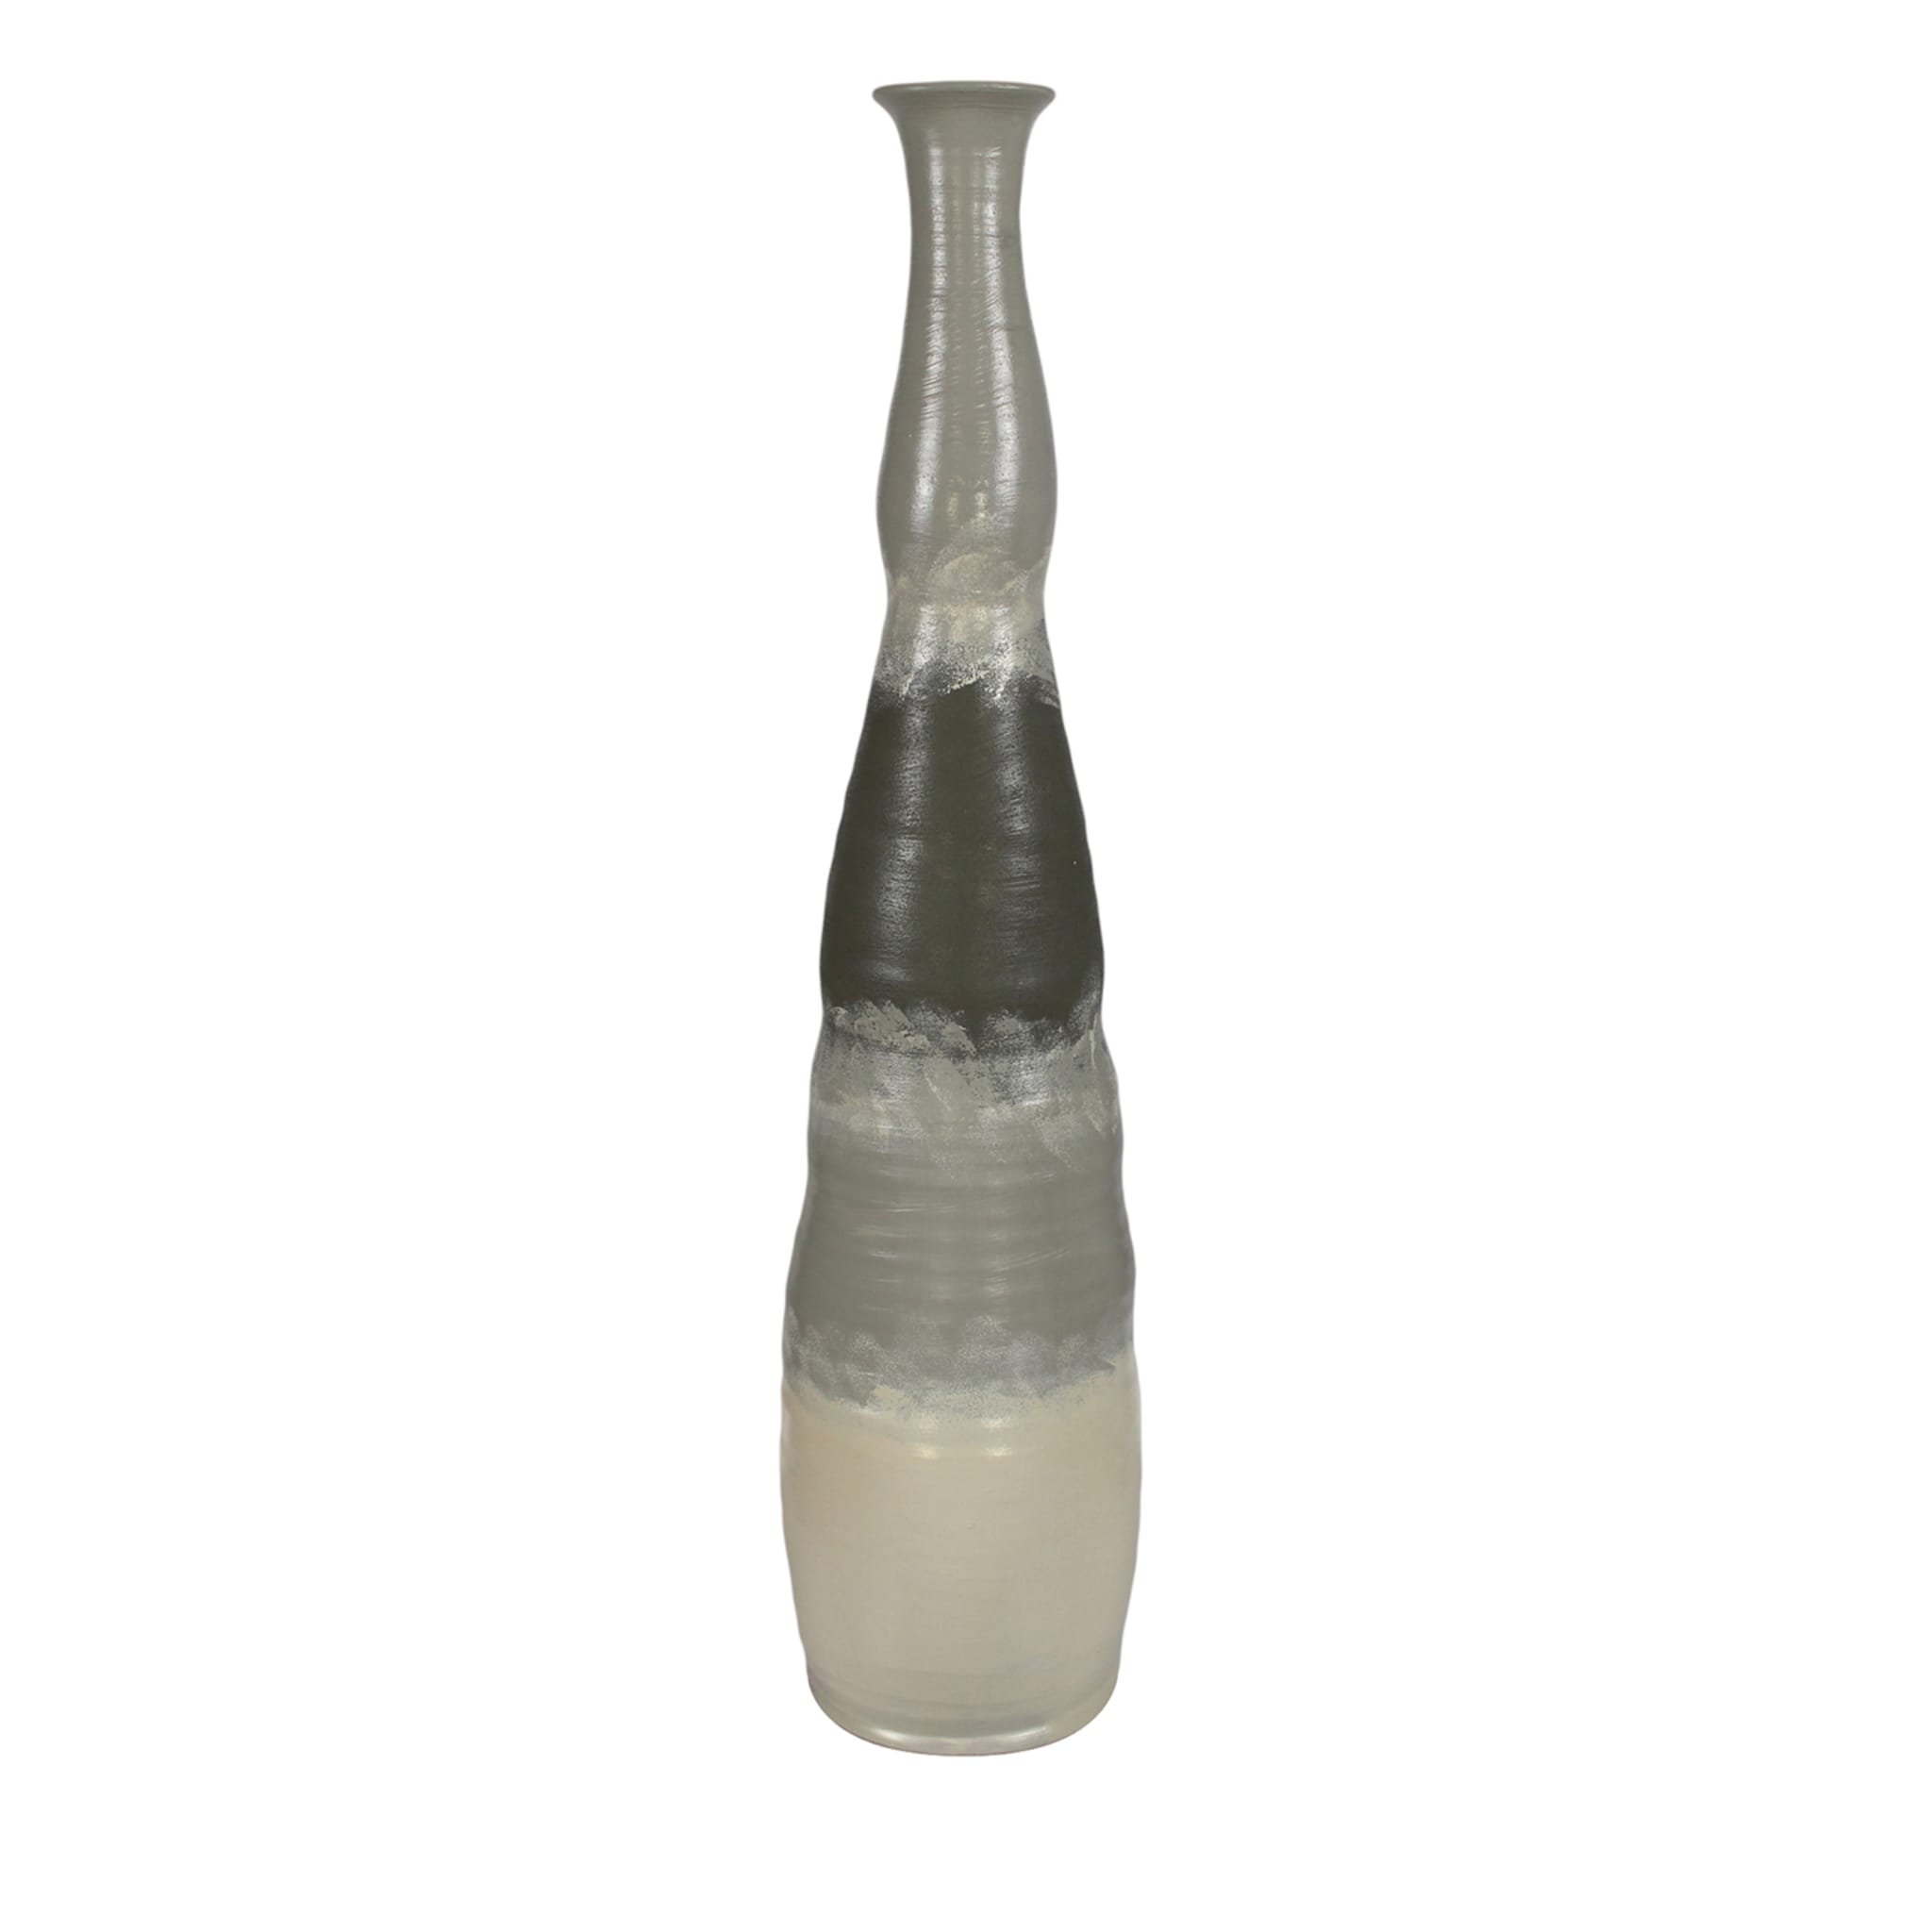 Grand vase gris bicolore 18 par Mascia Meccani - Vue principale